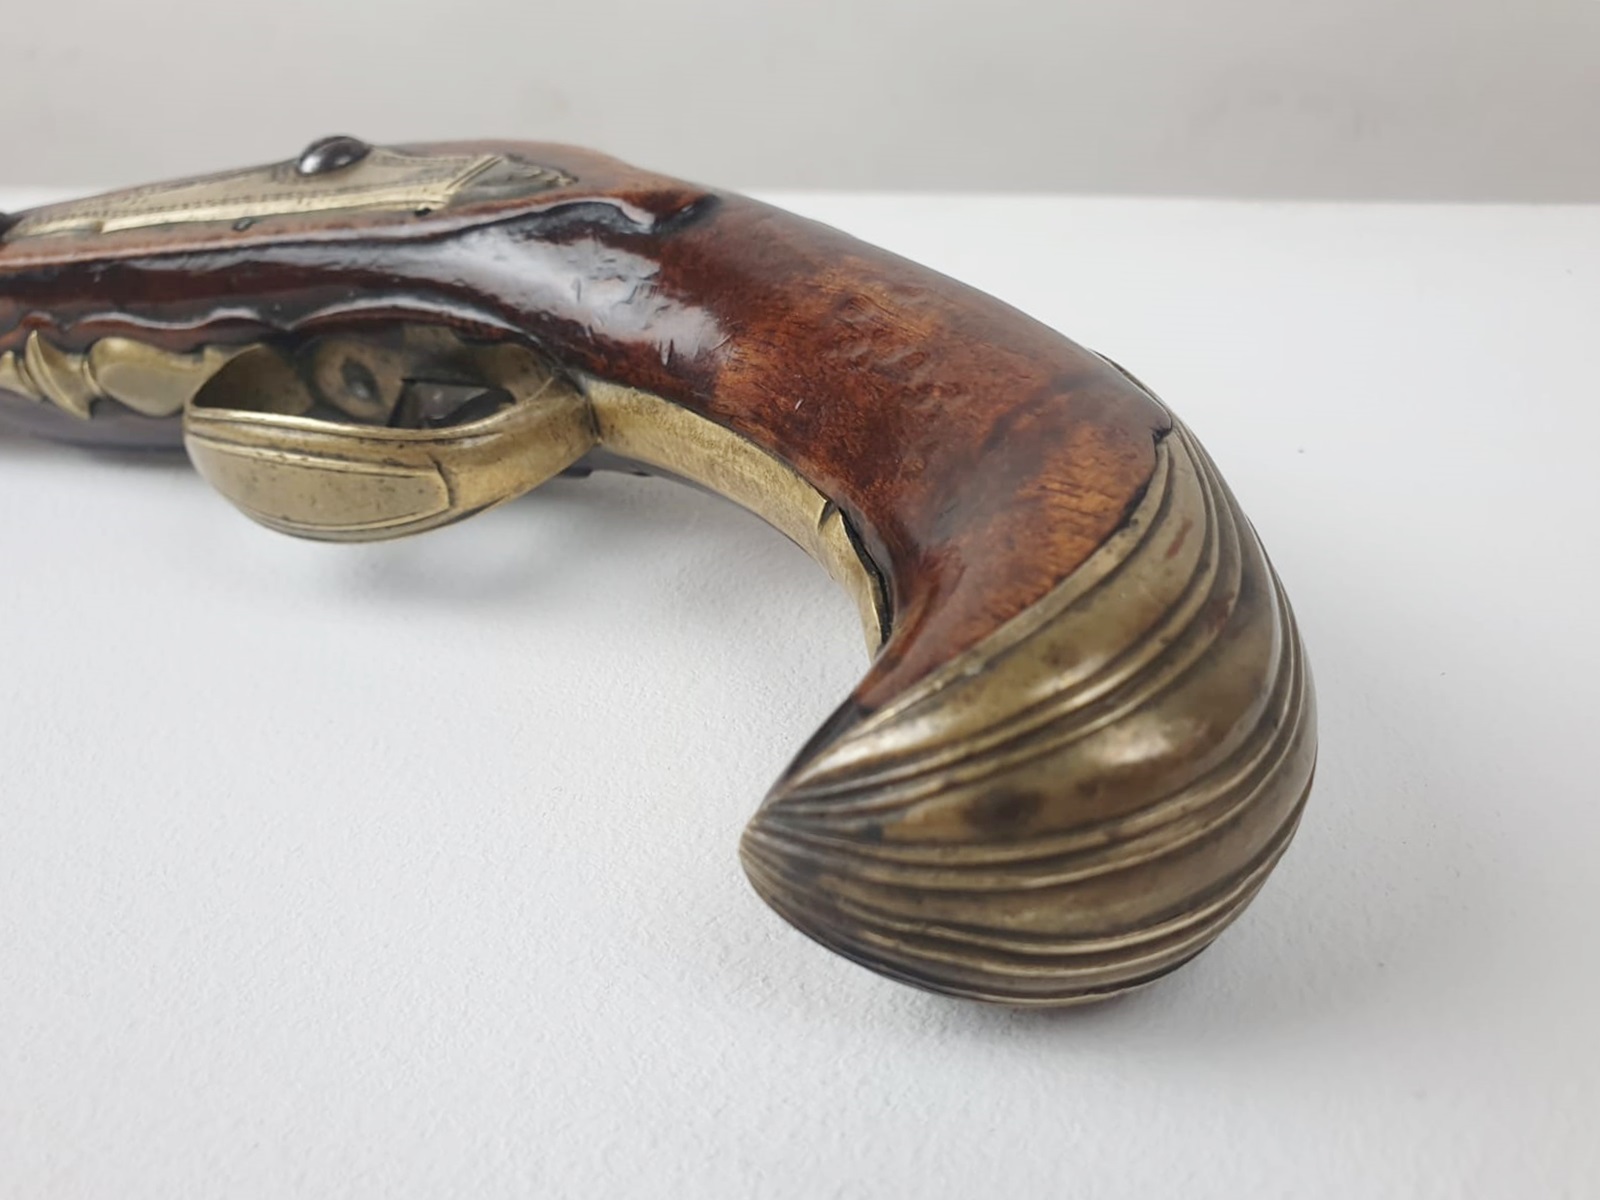 Flintlock pistol, fired around 1825